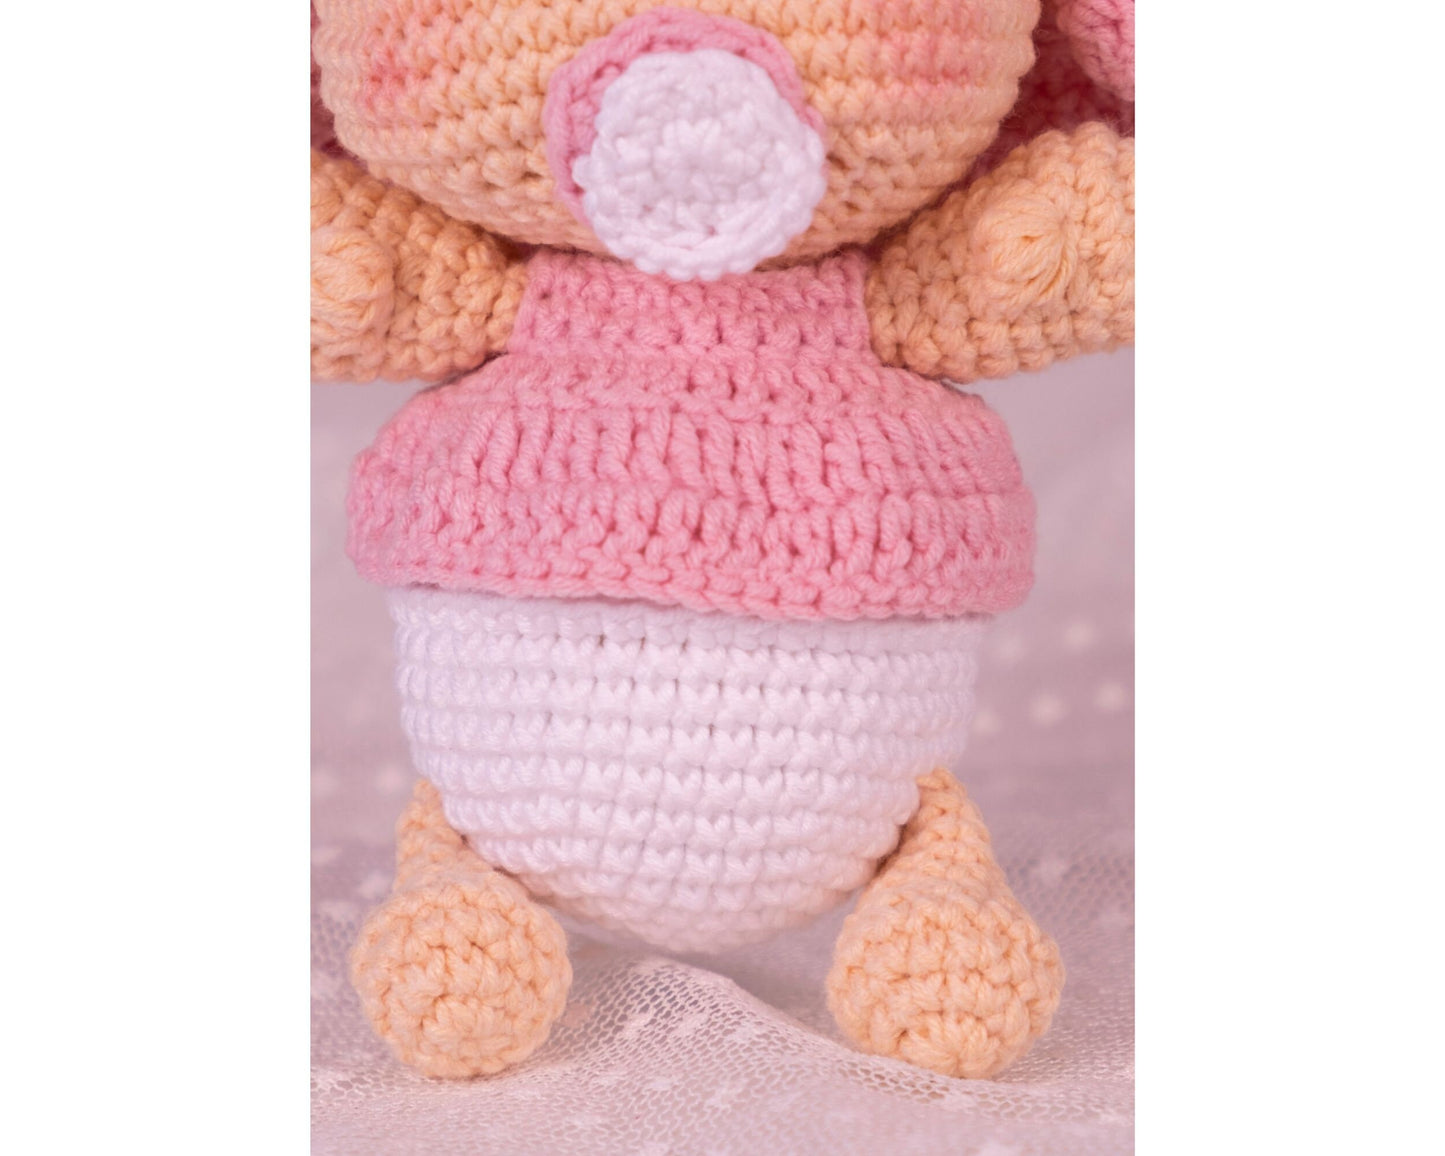 Crochet Baby Doll, Baby Boy Doll, Baby Girl Doll, Handmade Baby Doll, Knit Baby Doll, Baby Crochet Doll, Newborn Baby Doll, Baby Shower Gift